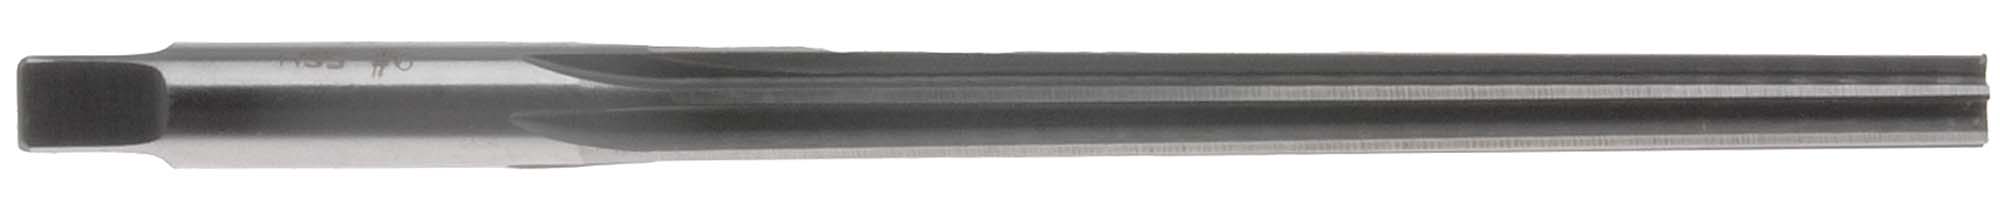 #10 Straight Flute Taper Pin Reamer, High Speed Steel